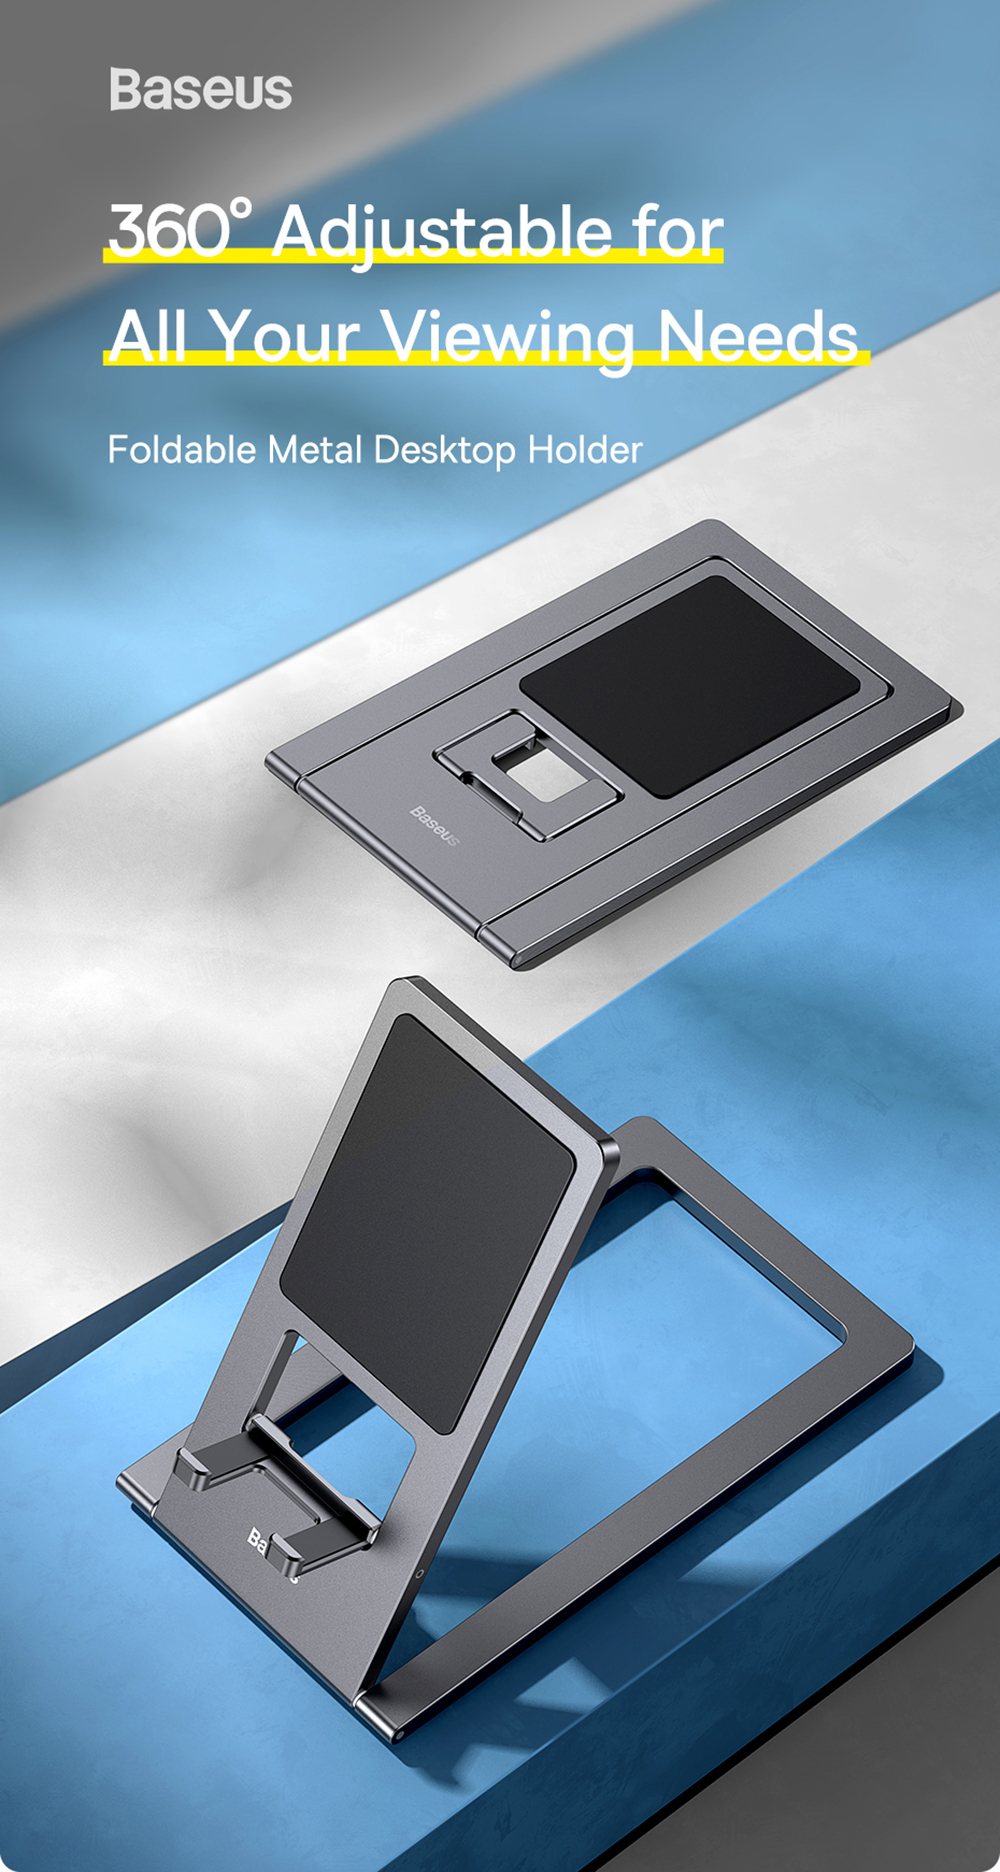 BASEUS-Foldable-Metal-Desktop-Holder-For-Tablet-Mobile-Phone-Flat-Stand-Notebook-Stand-Laptop-Suppor-1932920-1